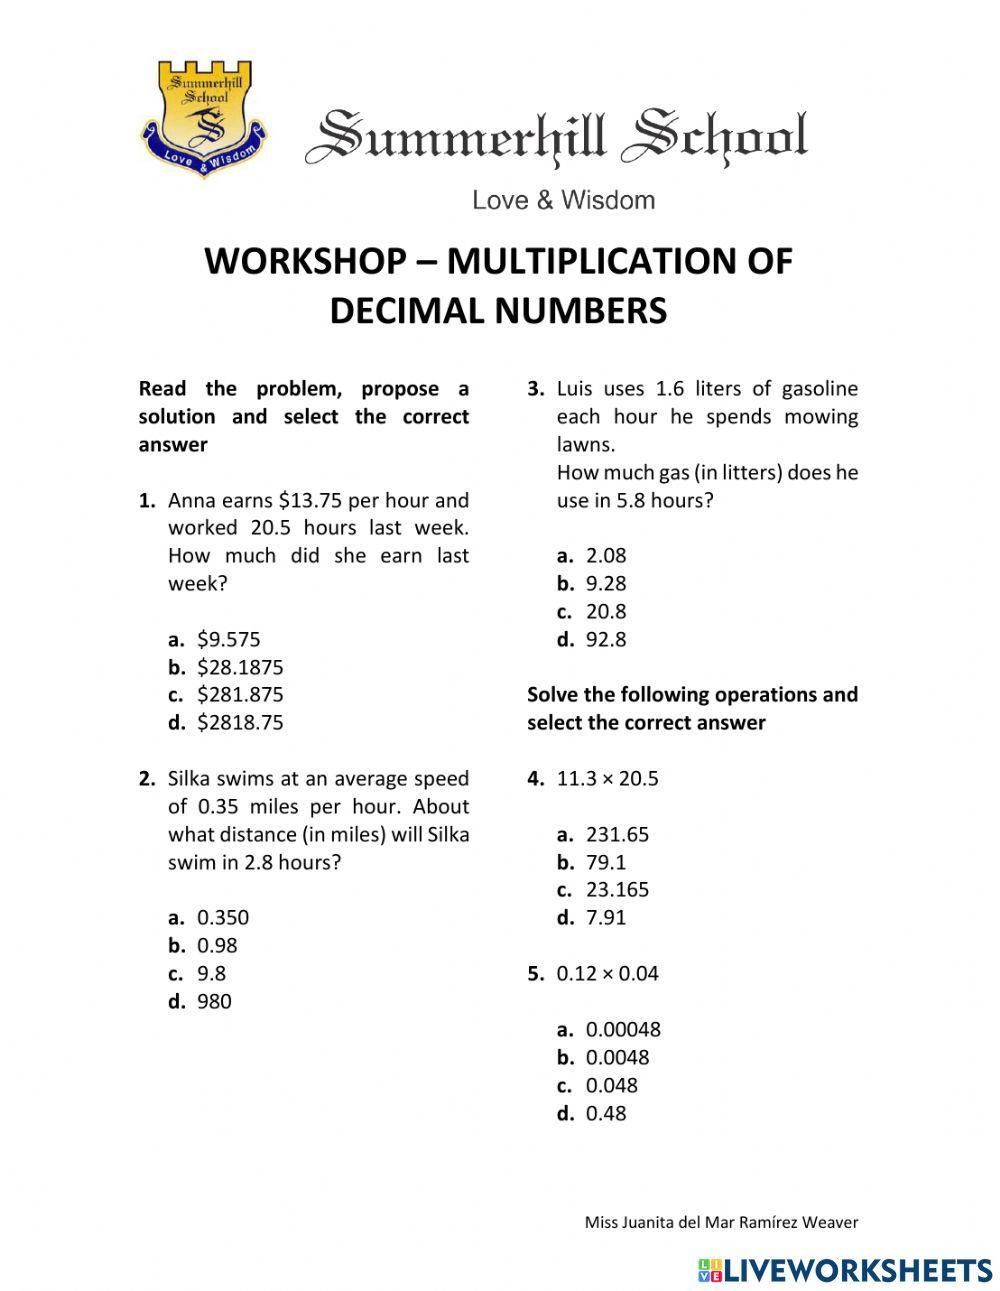 Multiplication of decimal numbers